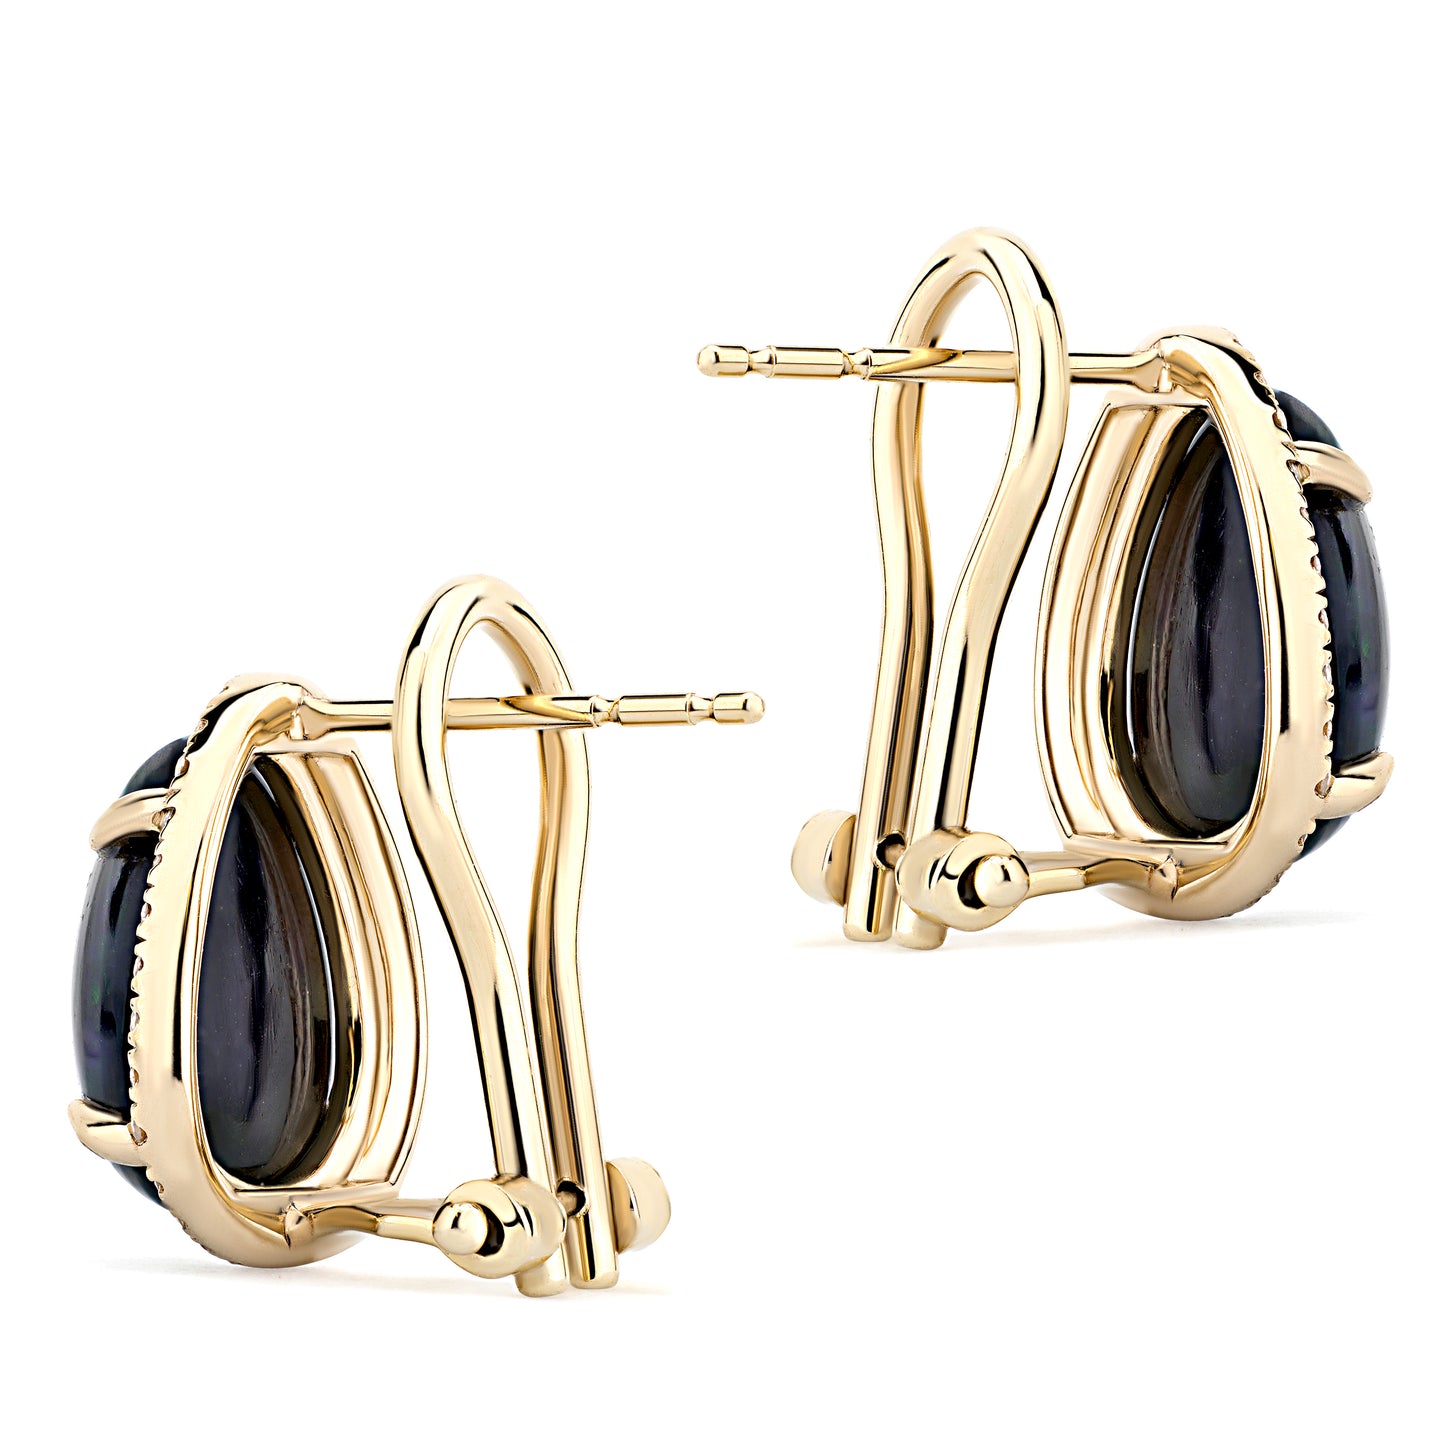 14K Yellow Gold Kimmie Black Opal Earrings with Diamond Halo Setting